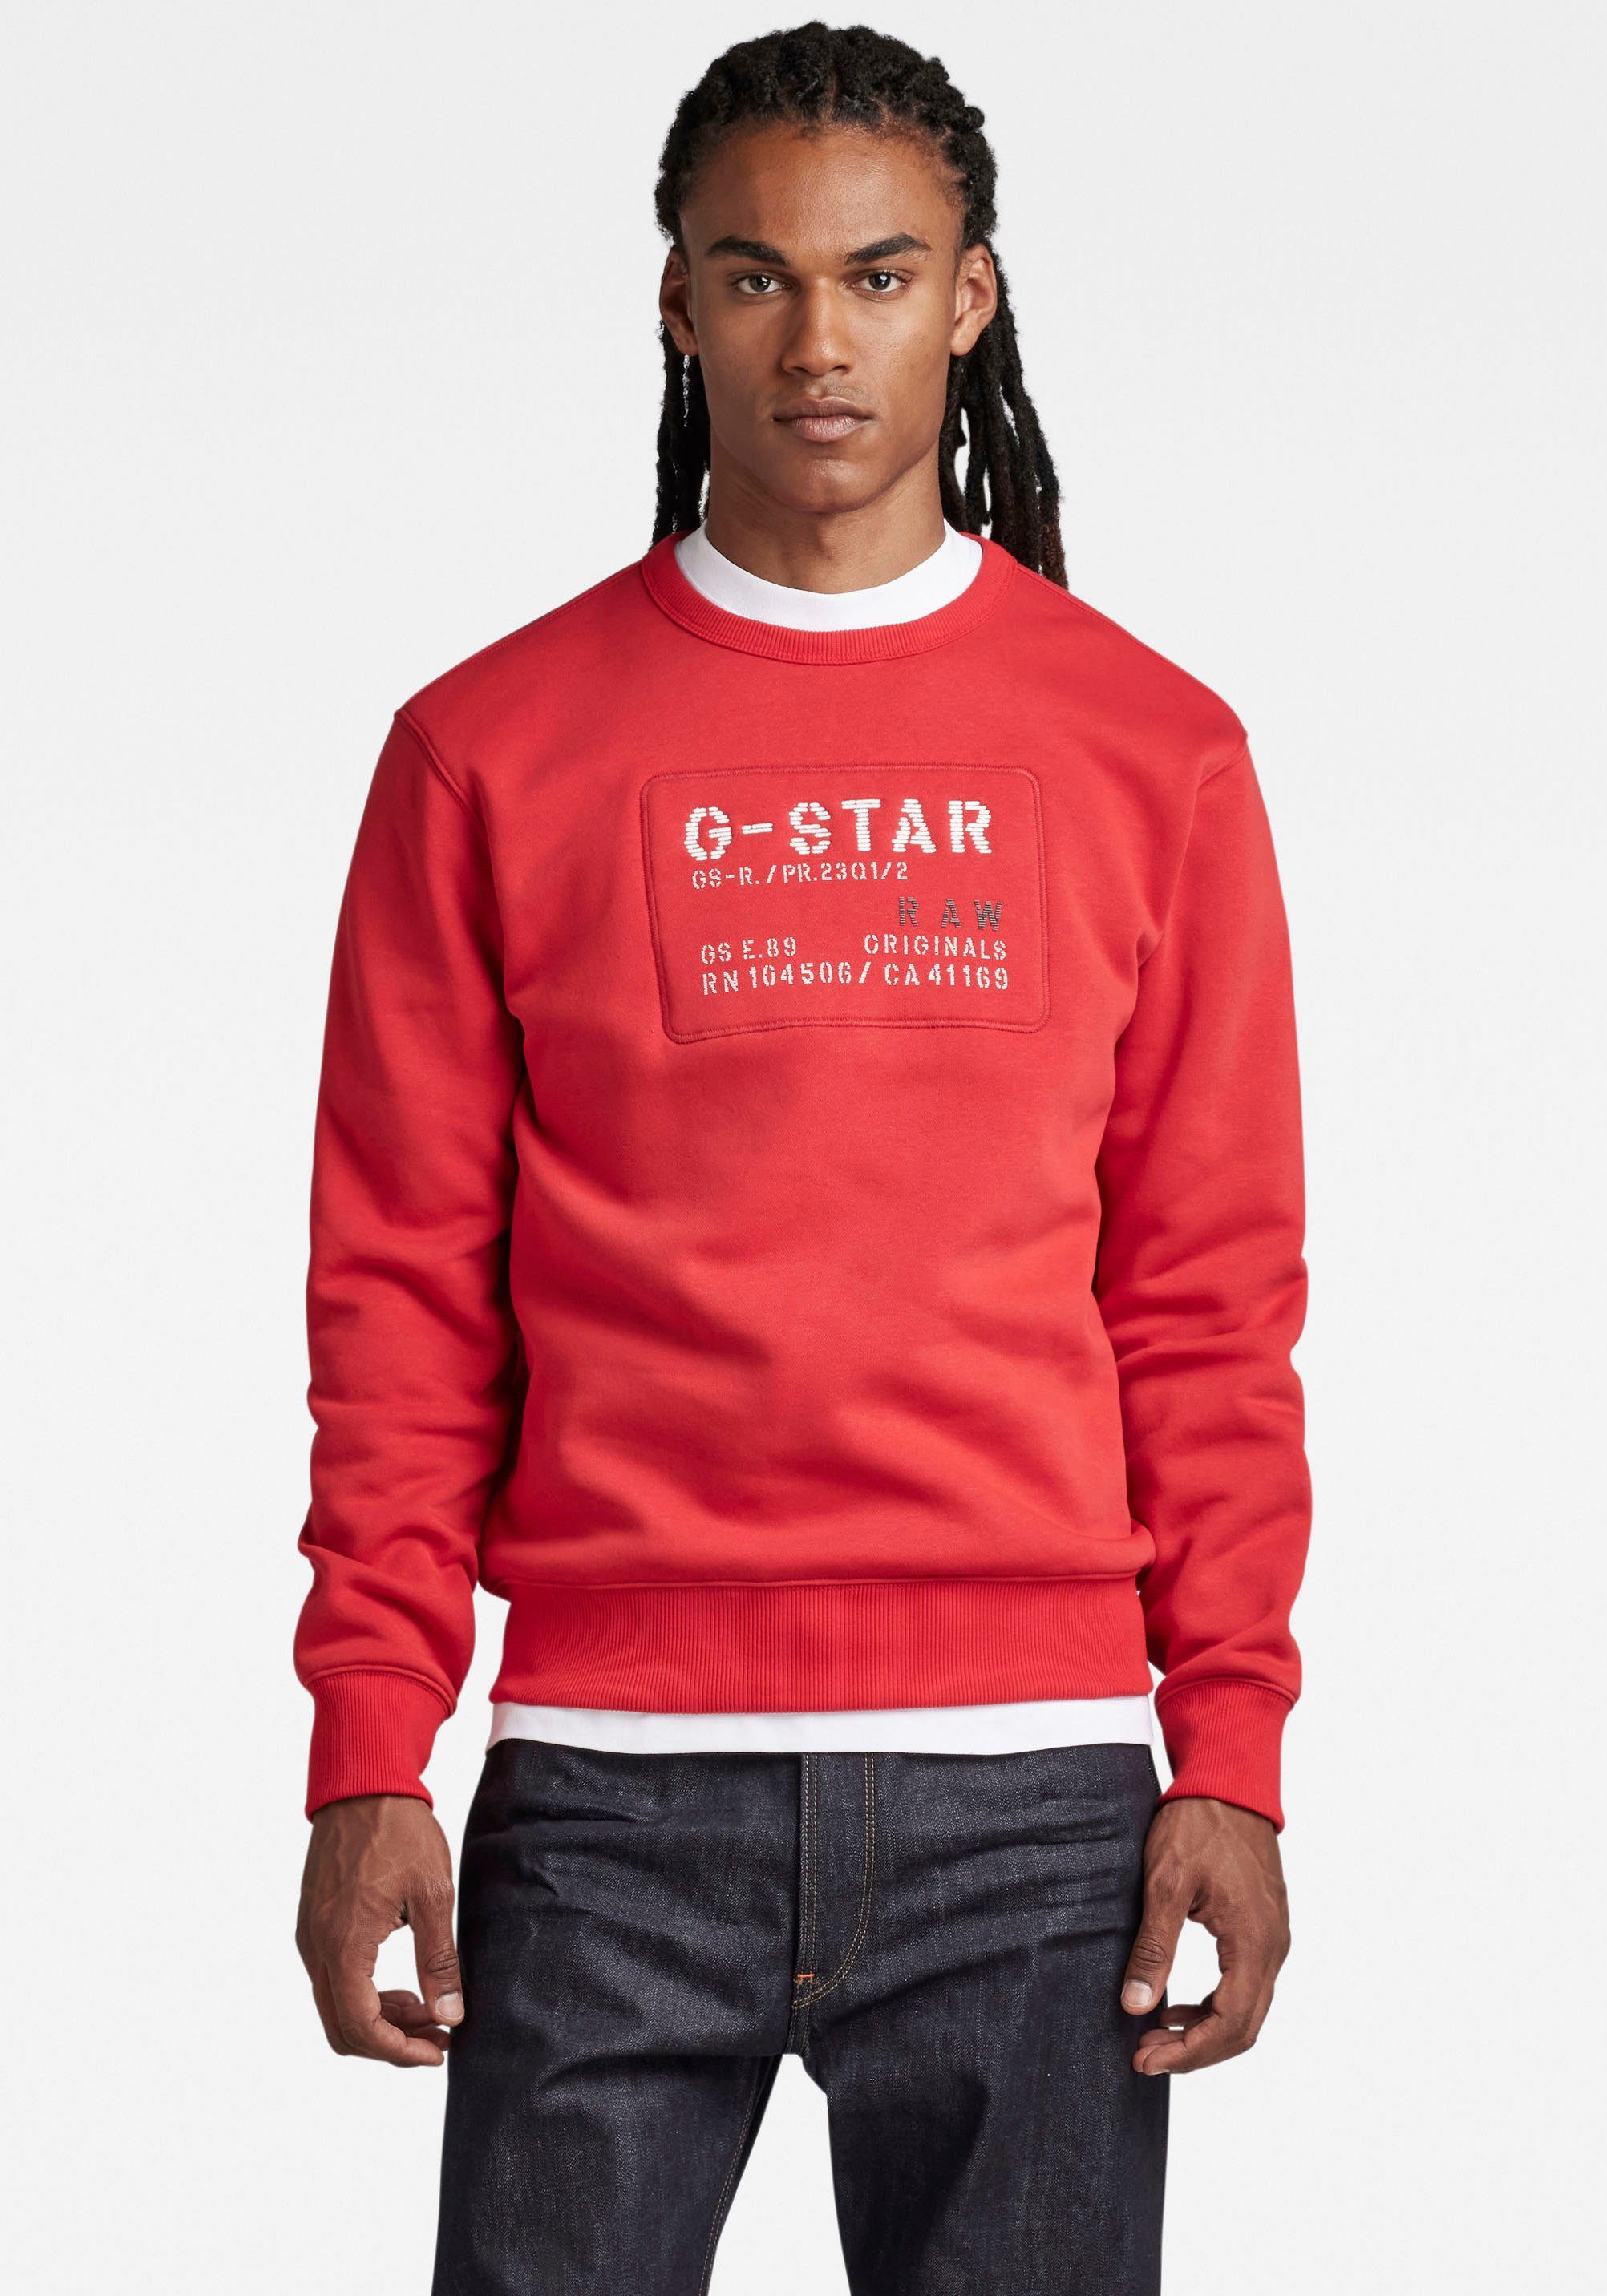 G-Star Red Acid Originals RAW Sweatshirt Sweatshirt